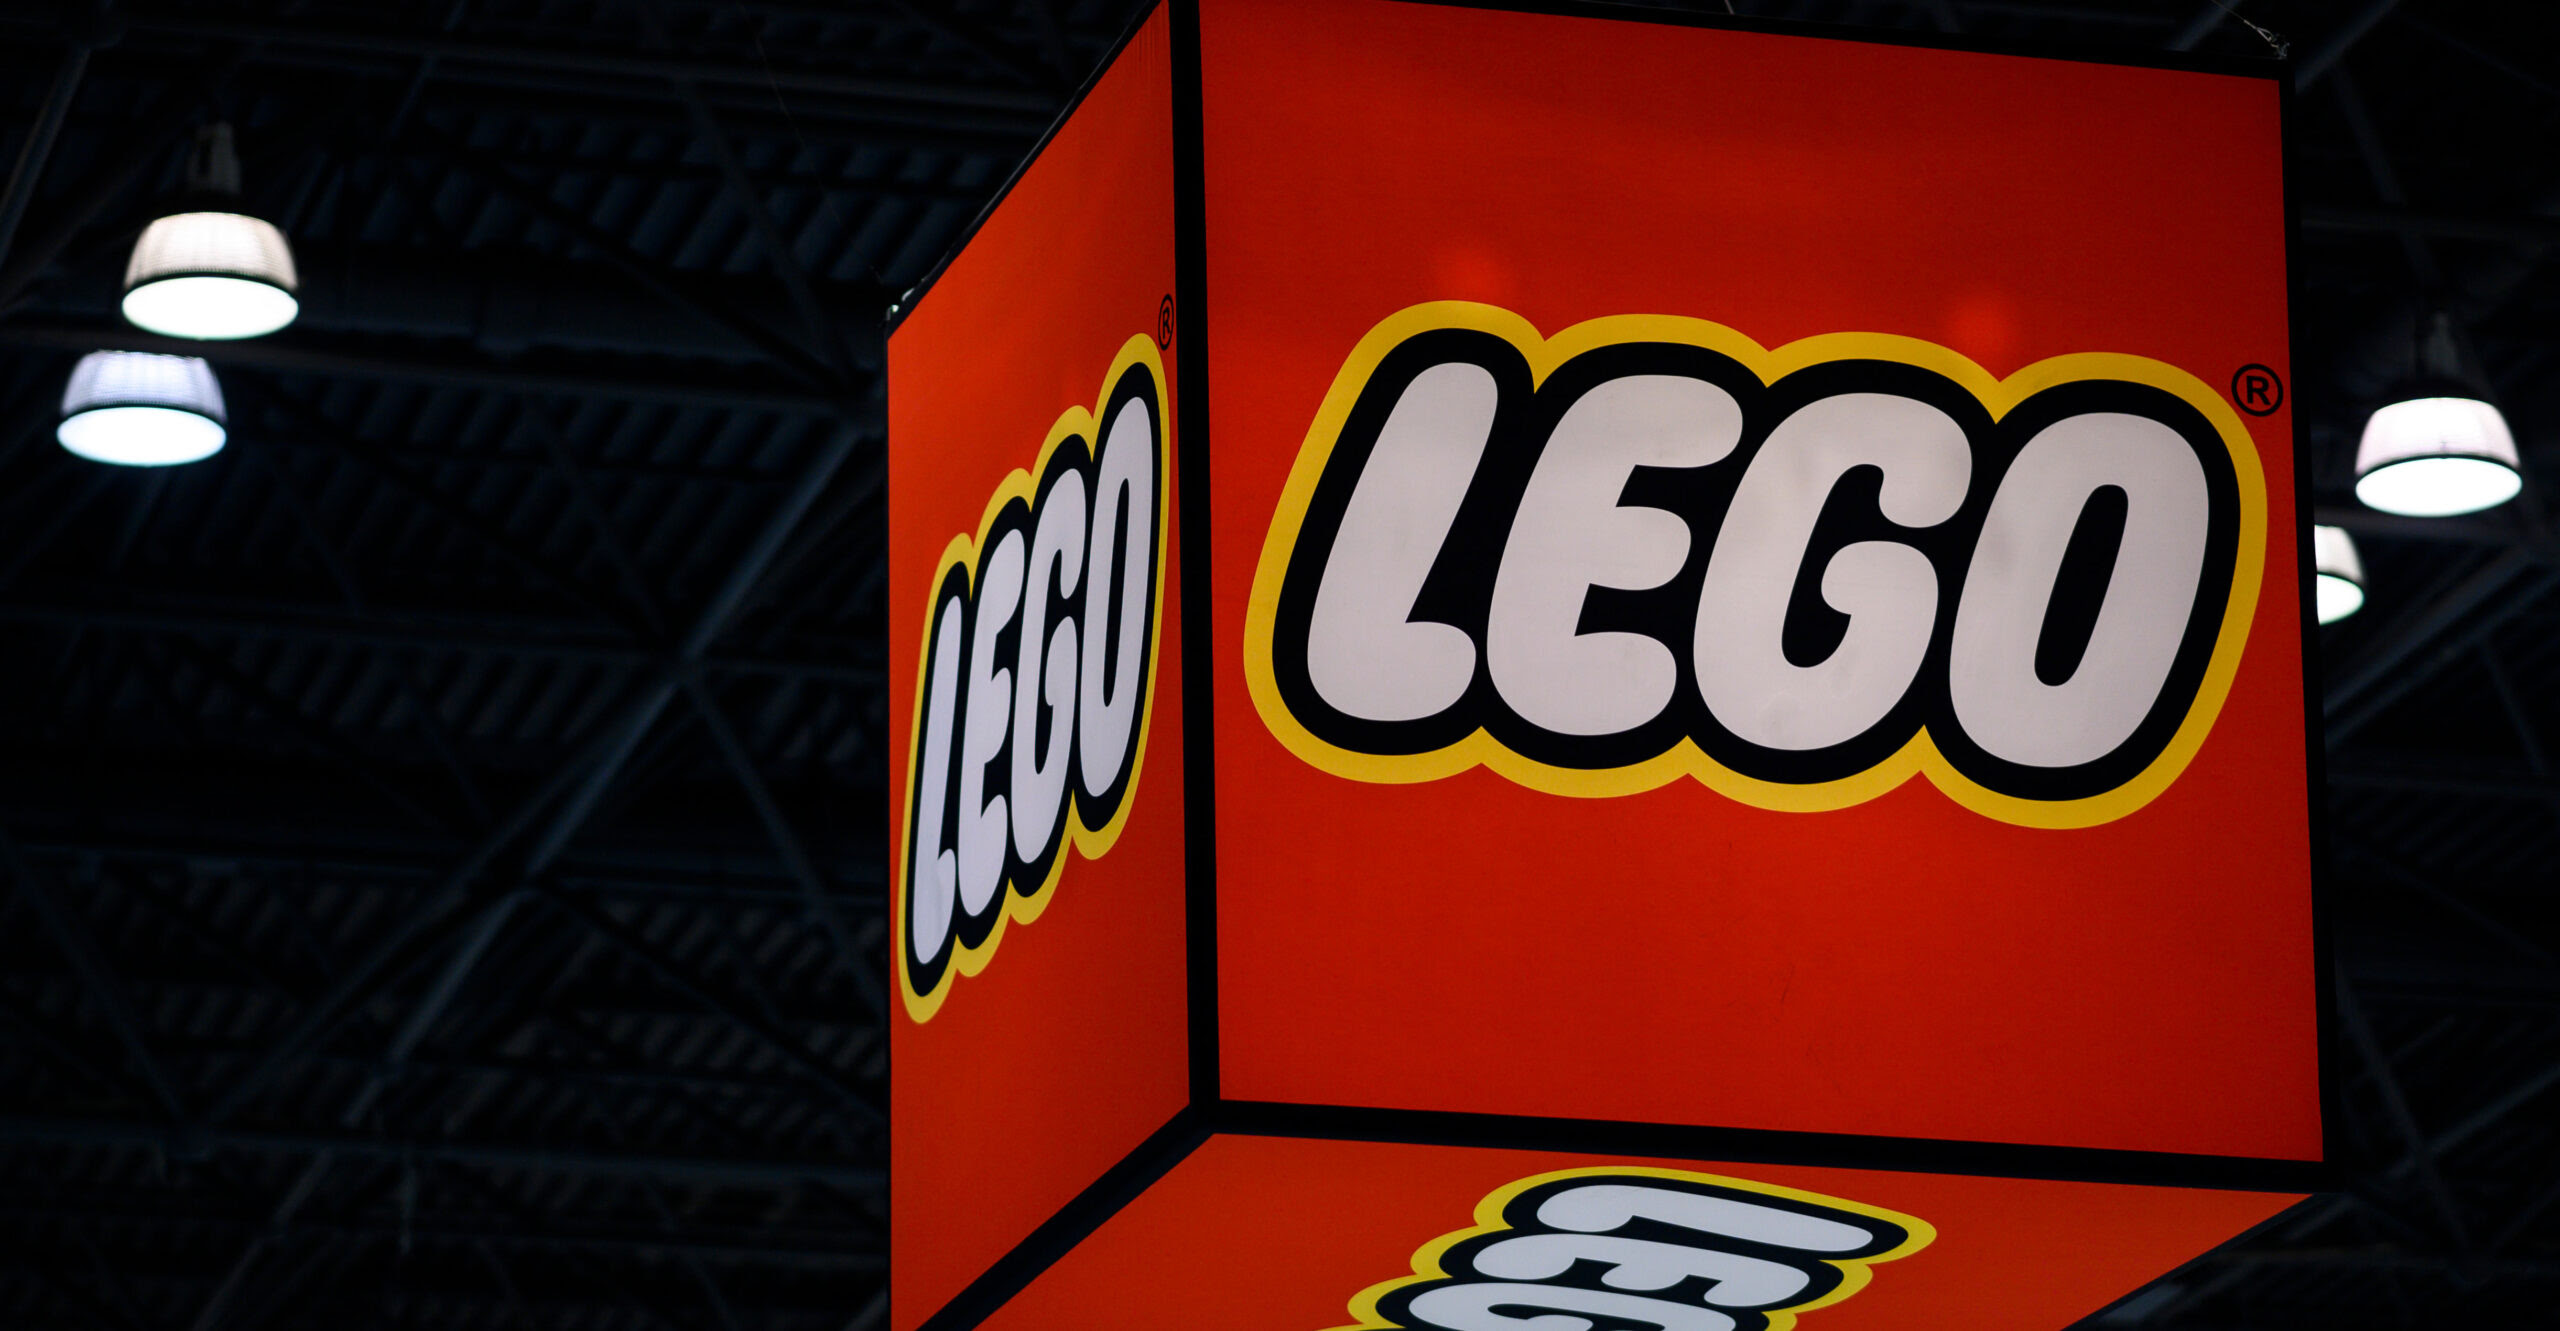 Lego Releases Set Celebrating 'LGBTQIA+' Figures, Drag Queens